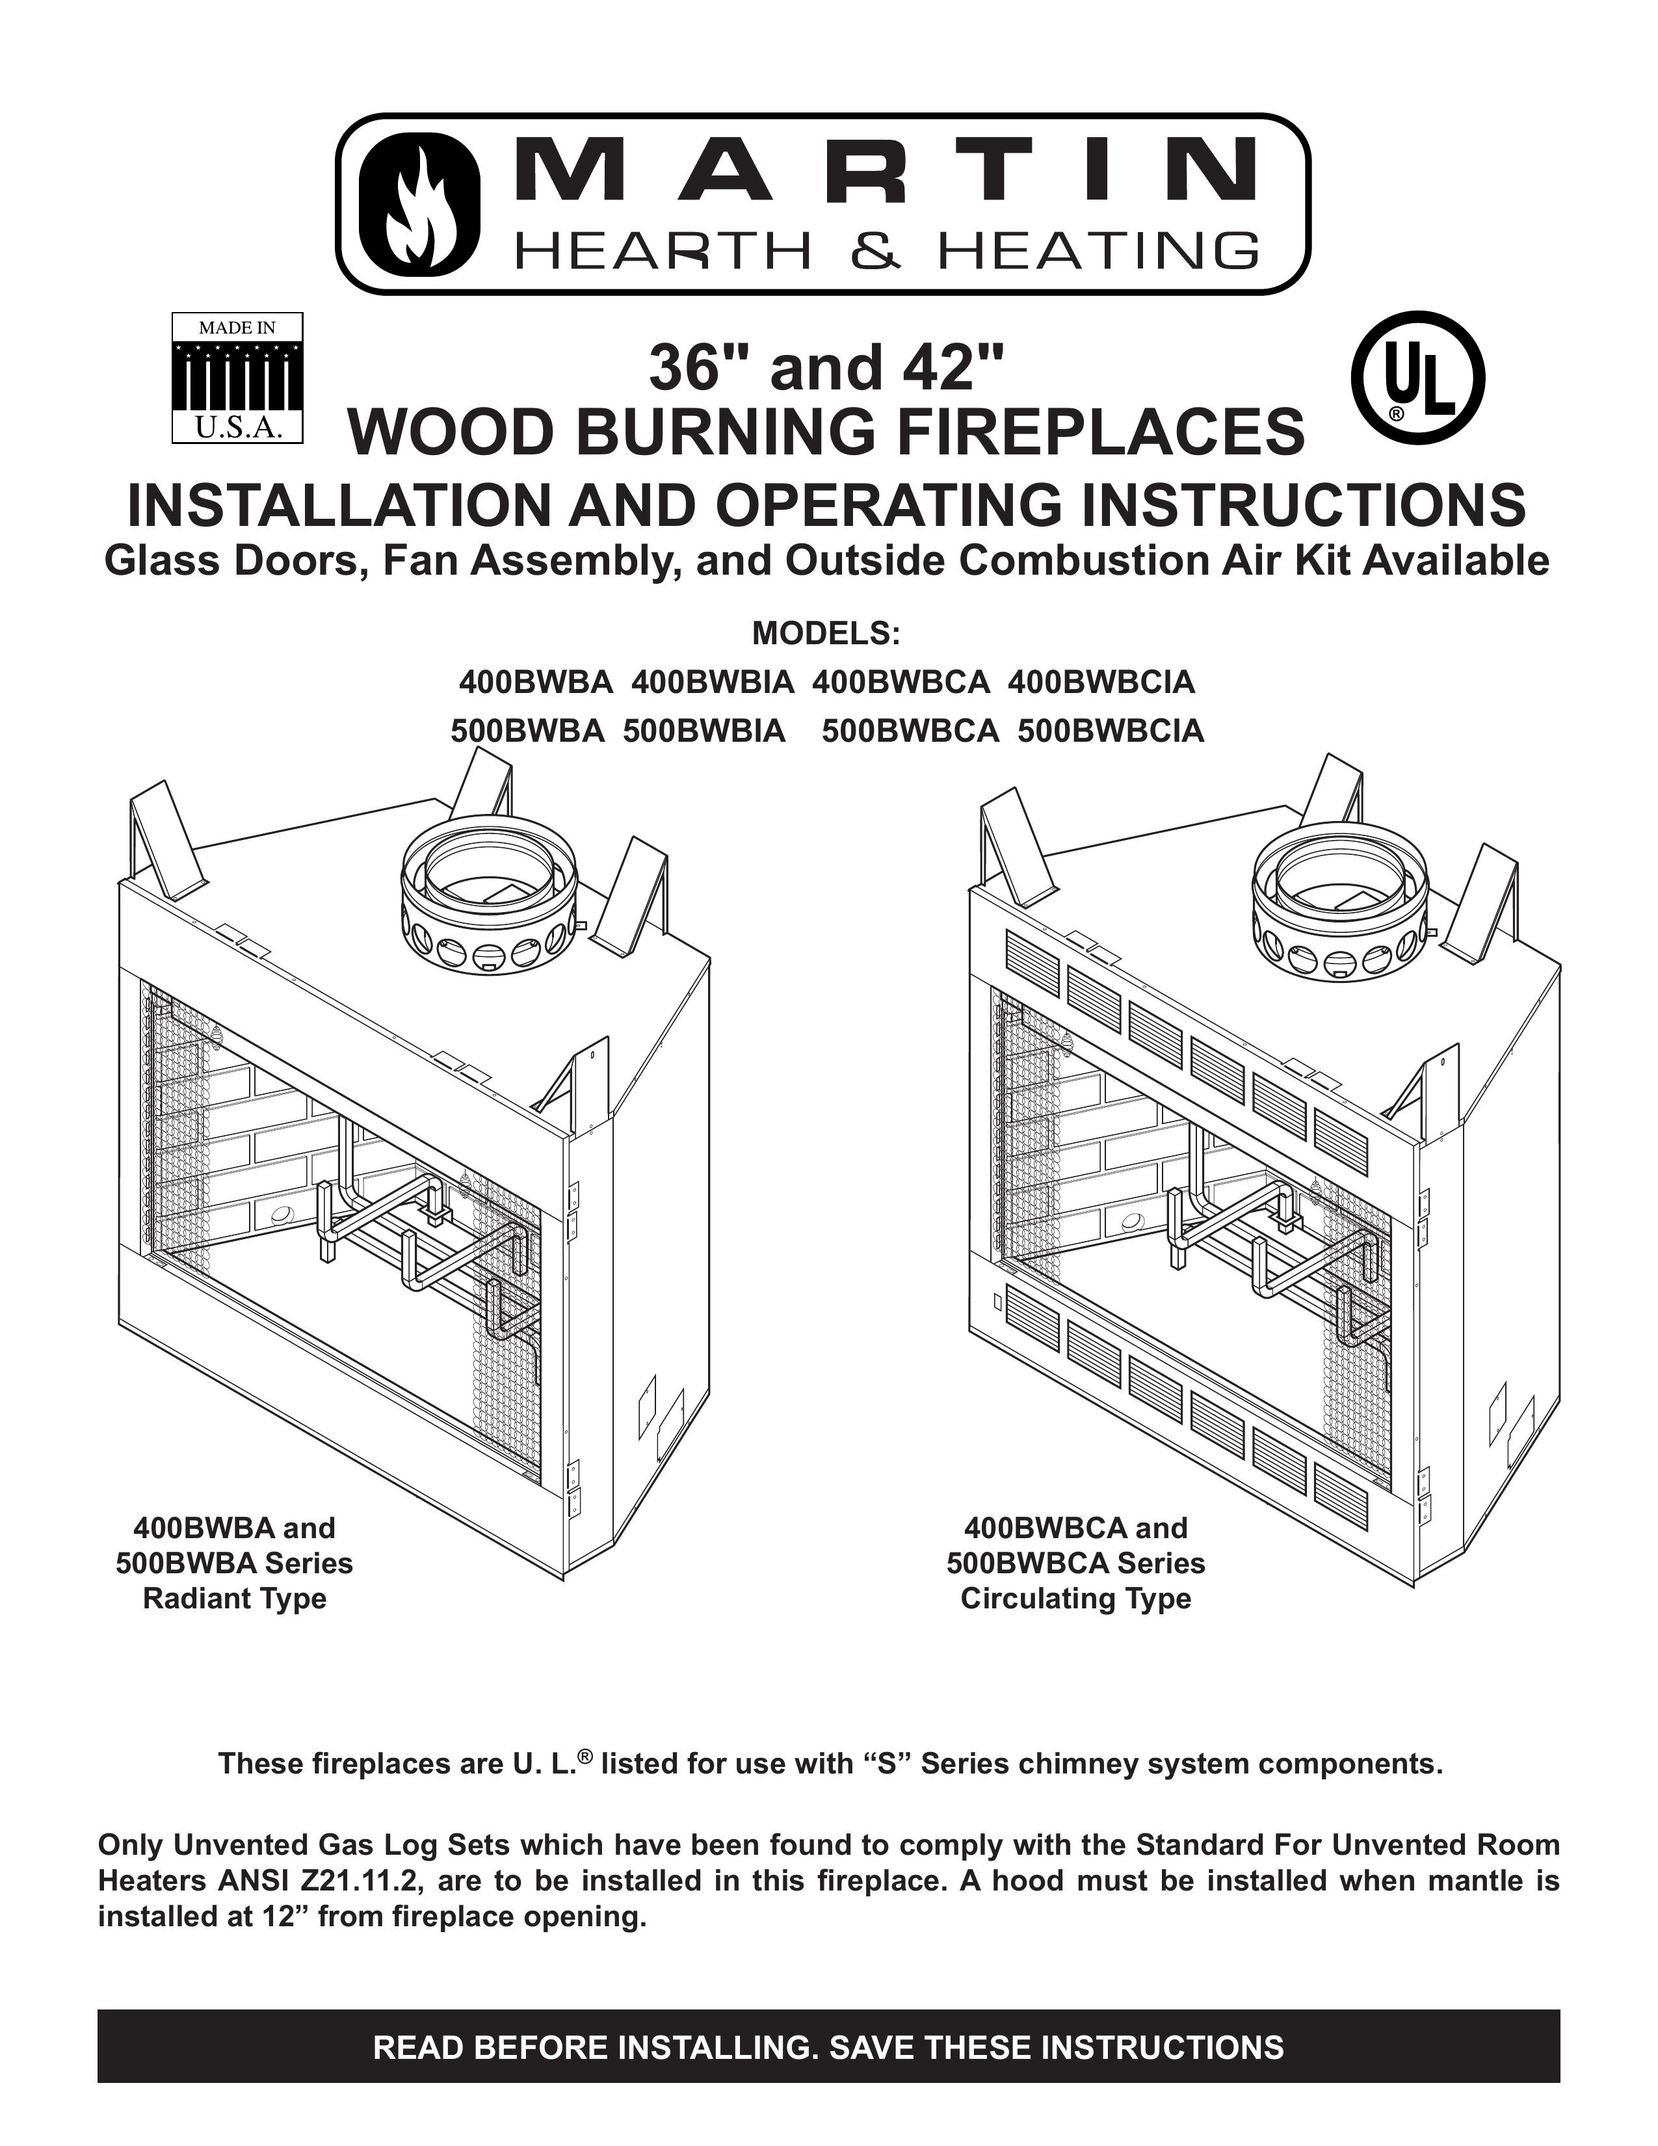 Martin Fireplaces 400BWBCA Indoor Fireplace User Manual